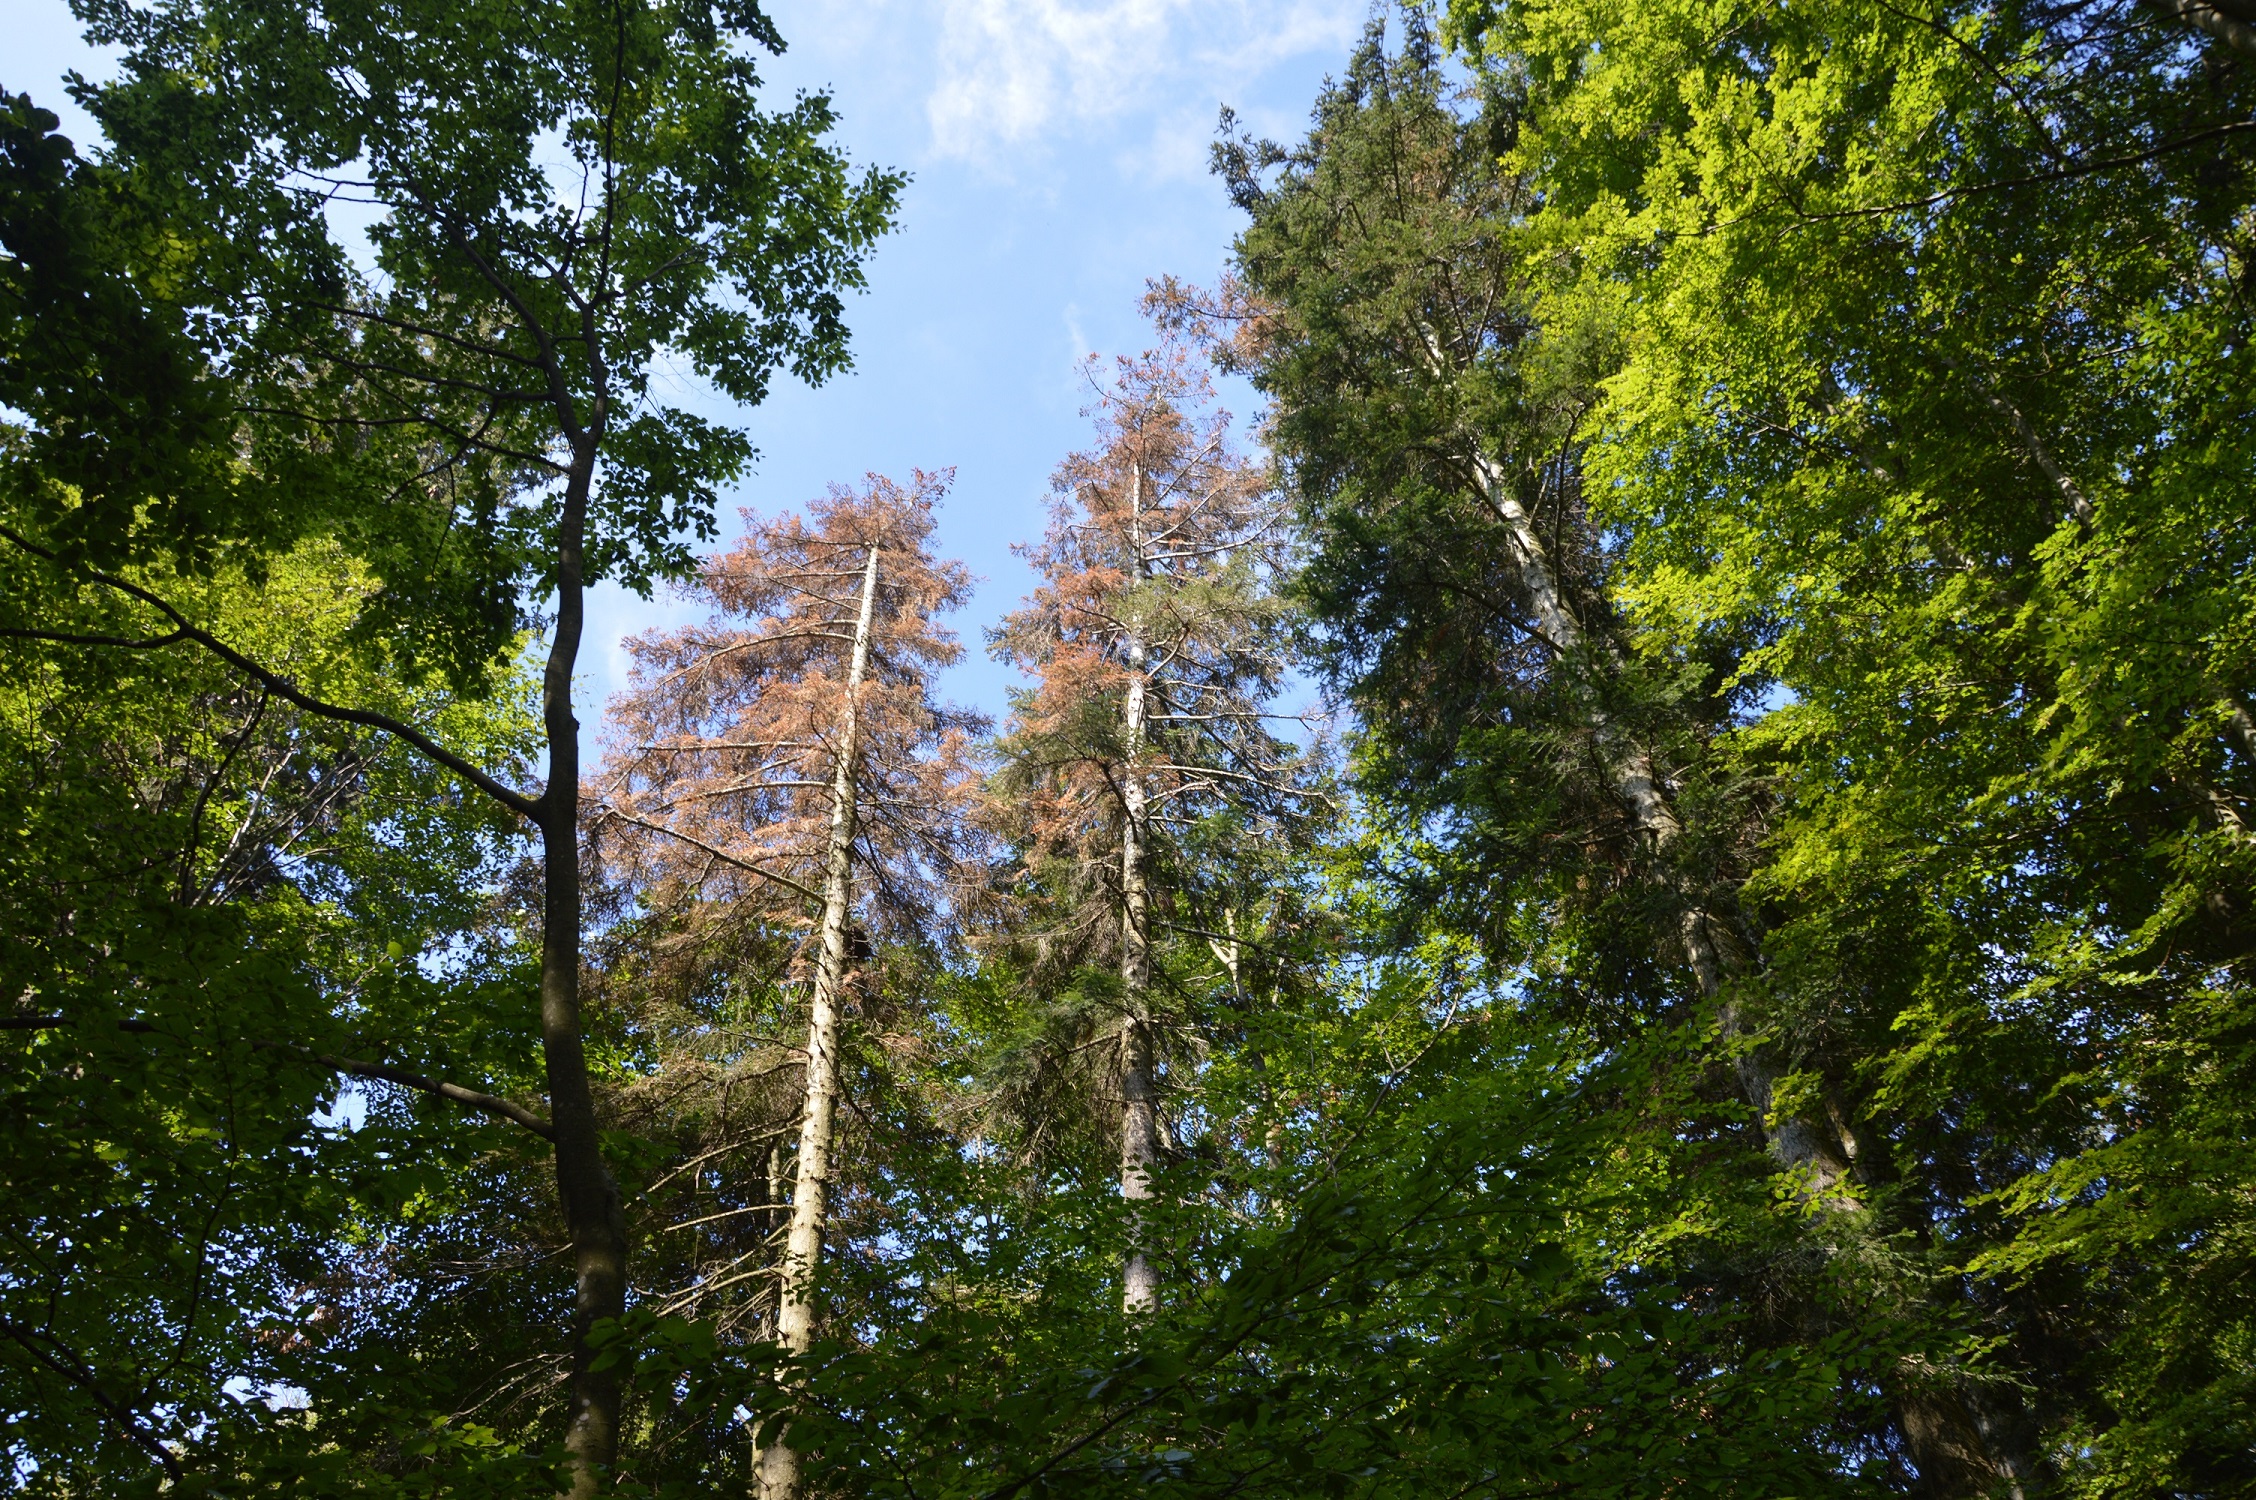 Visoka drevesa v gozdu